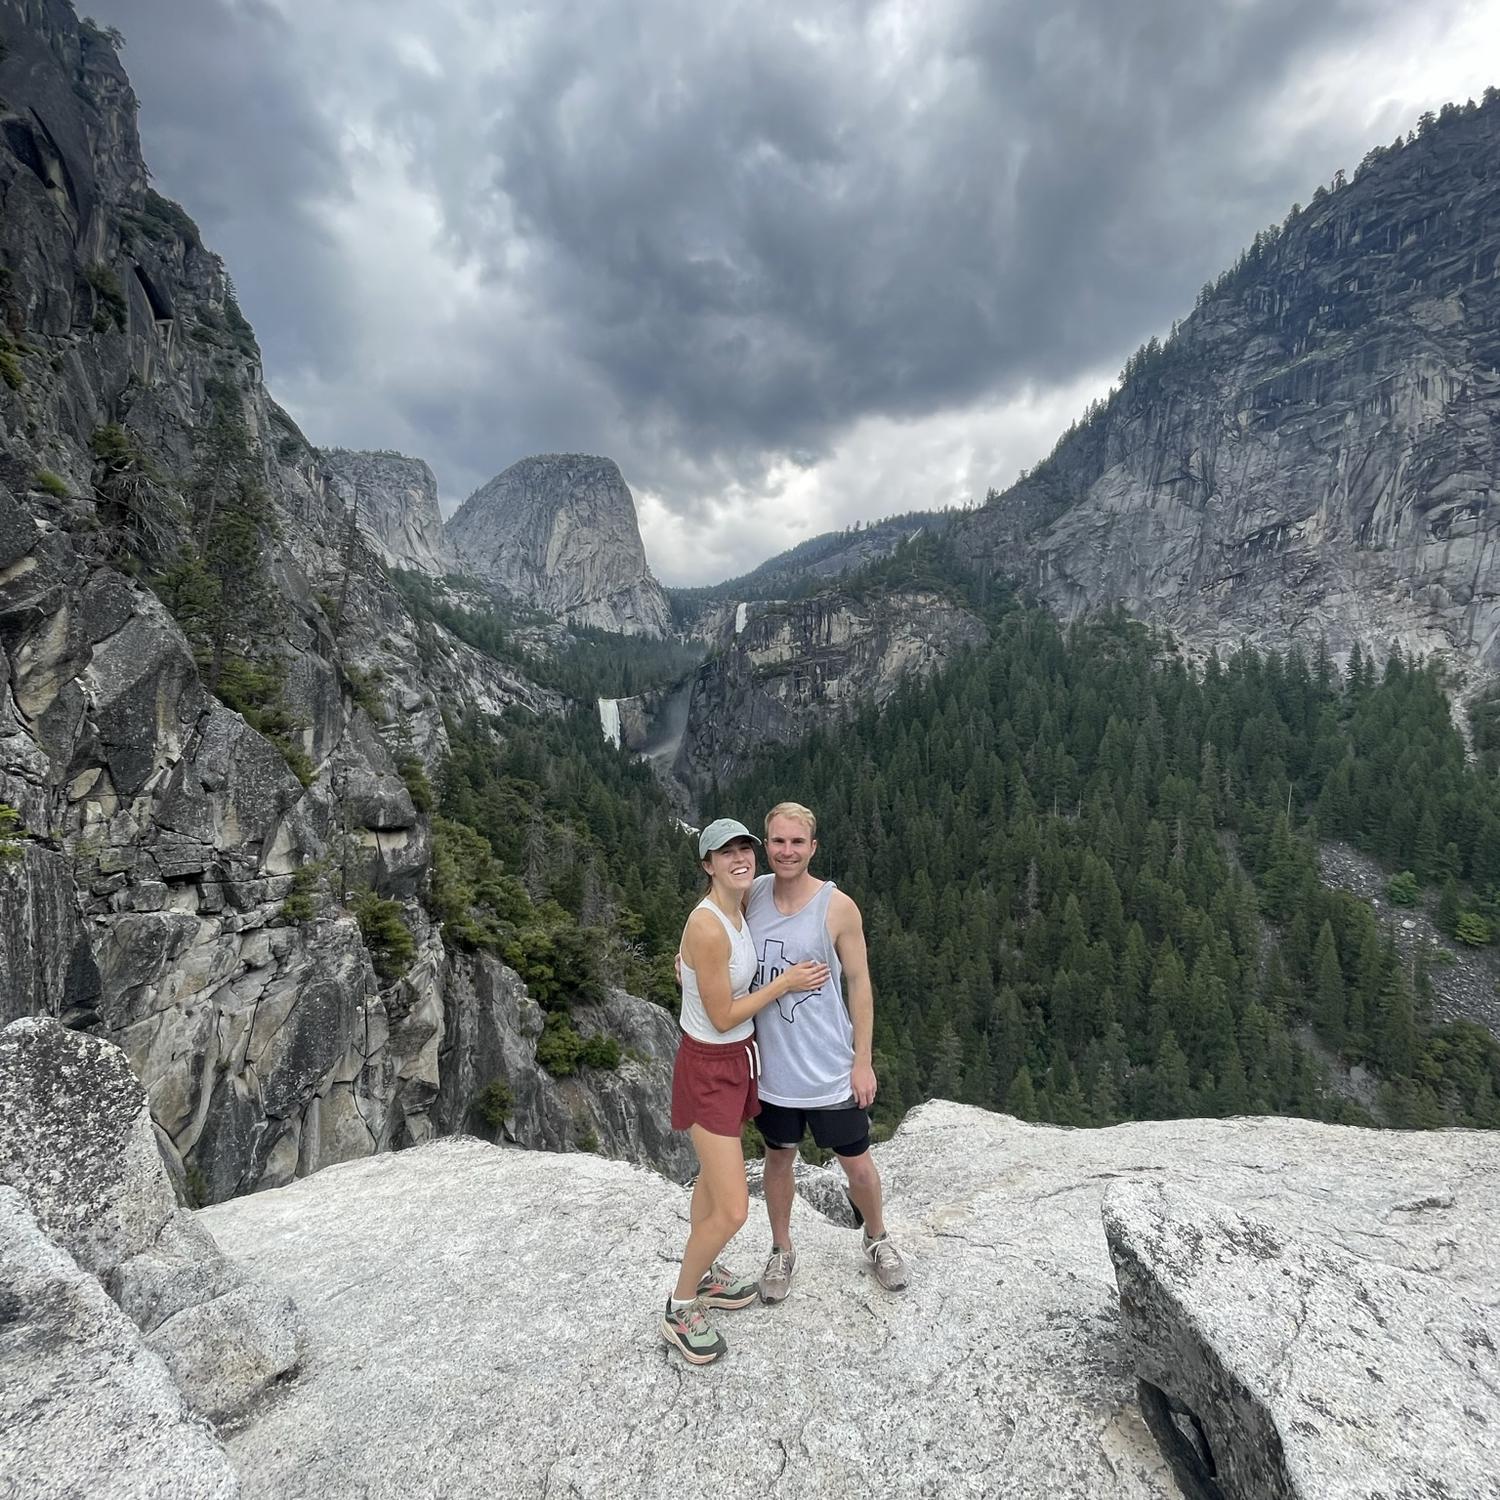 Yosemite National Park
6/13/2023